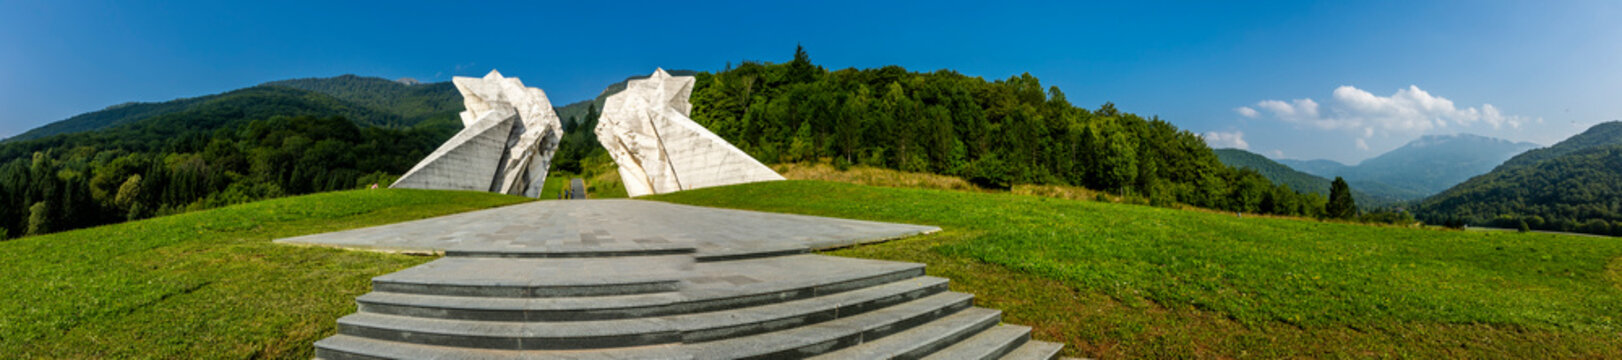 Memorial World War Two monument Kadinjaca in Serbia